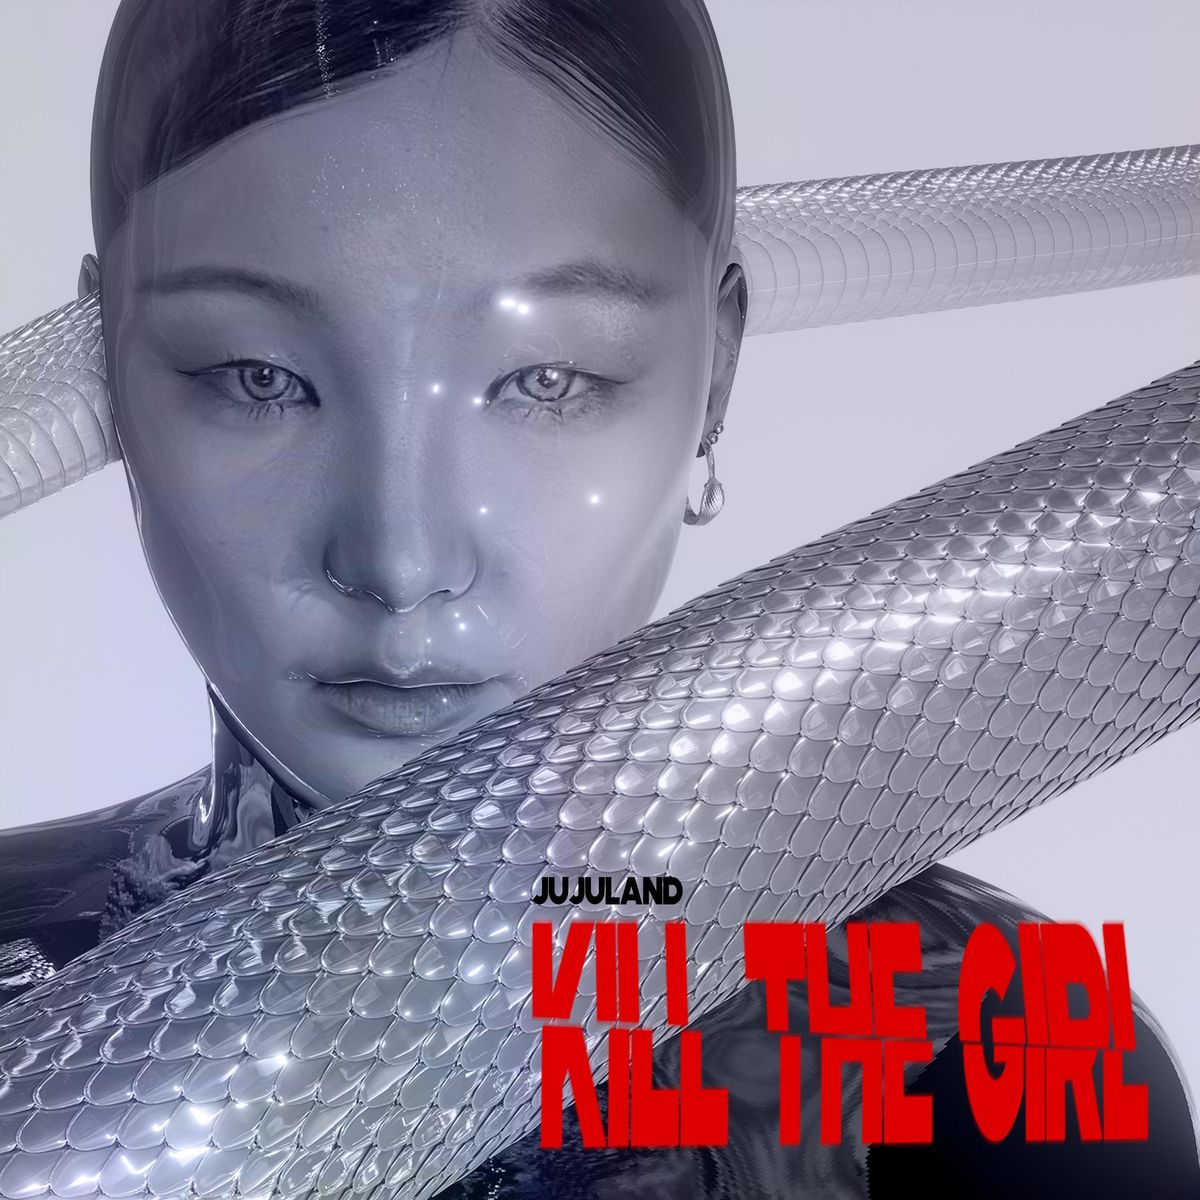 jujuland – Kill the girl